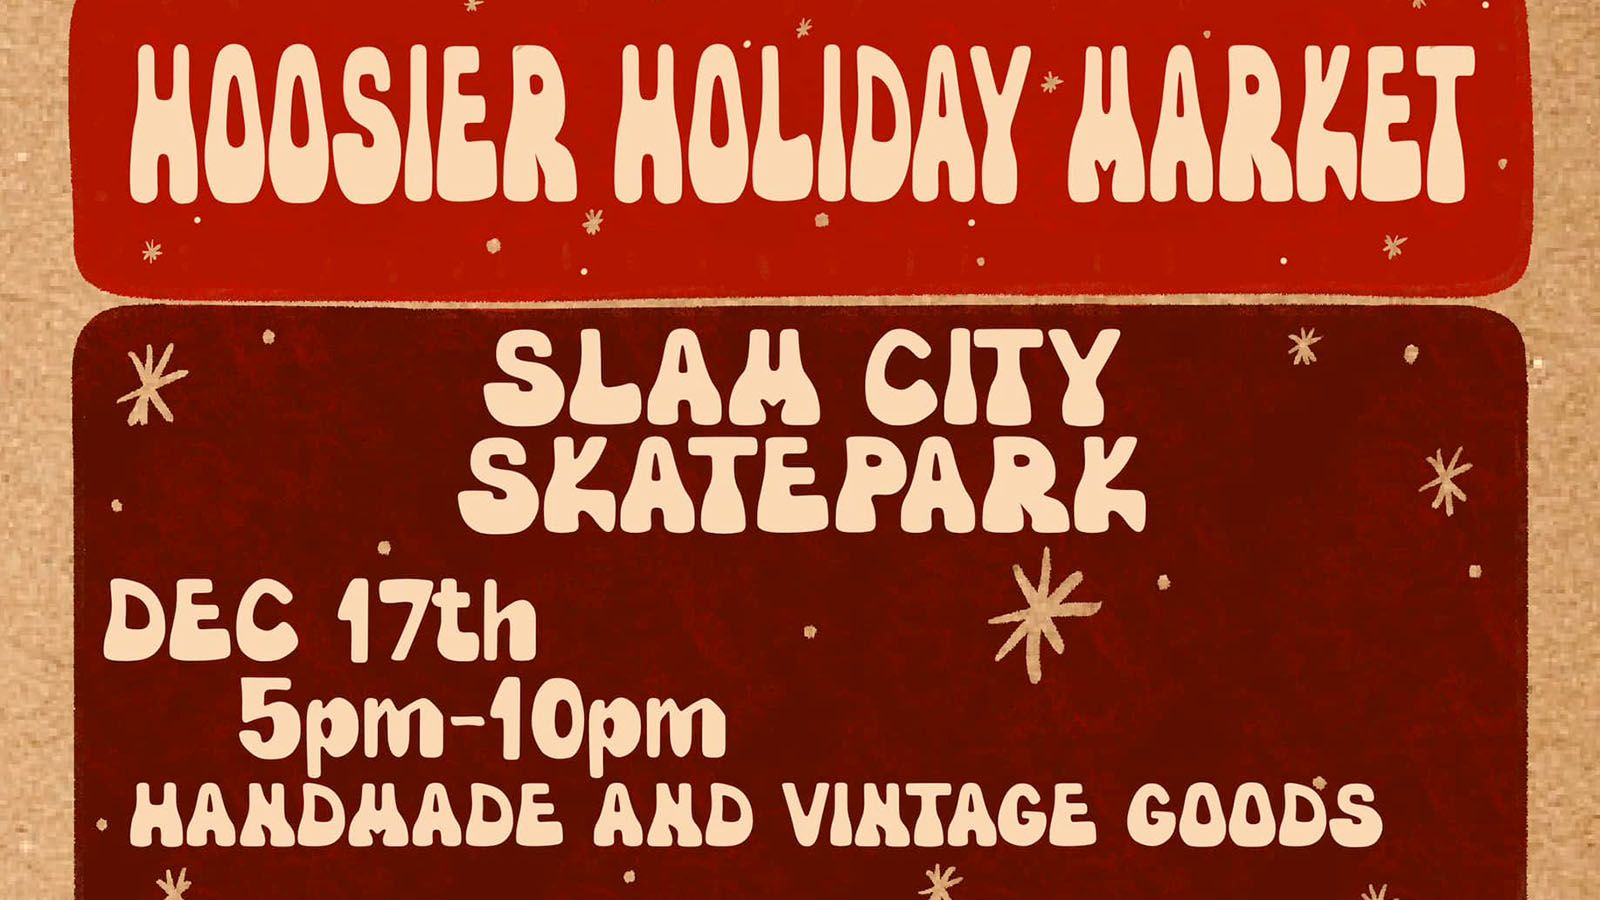 The Hoosier Holiday Market will be Sunday, Dec. 17, at Slam City Skatepark.